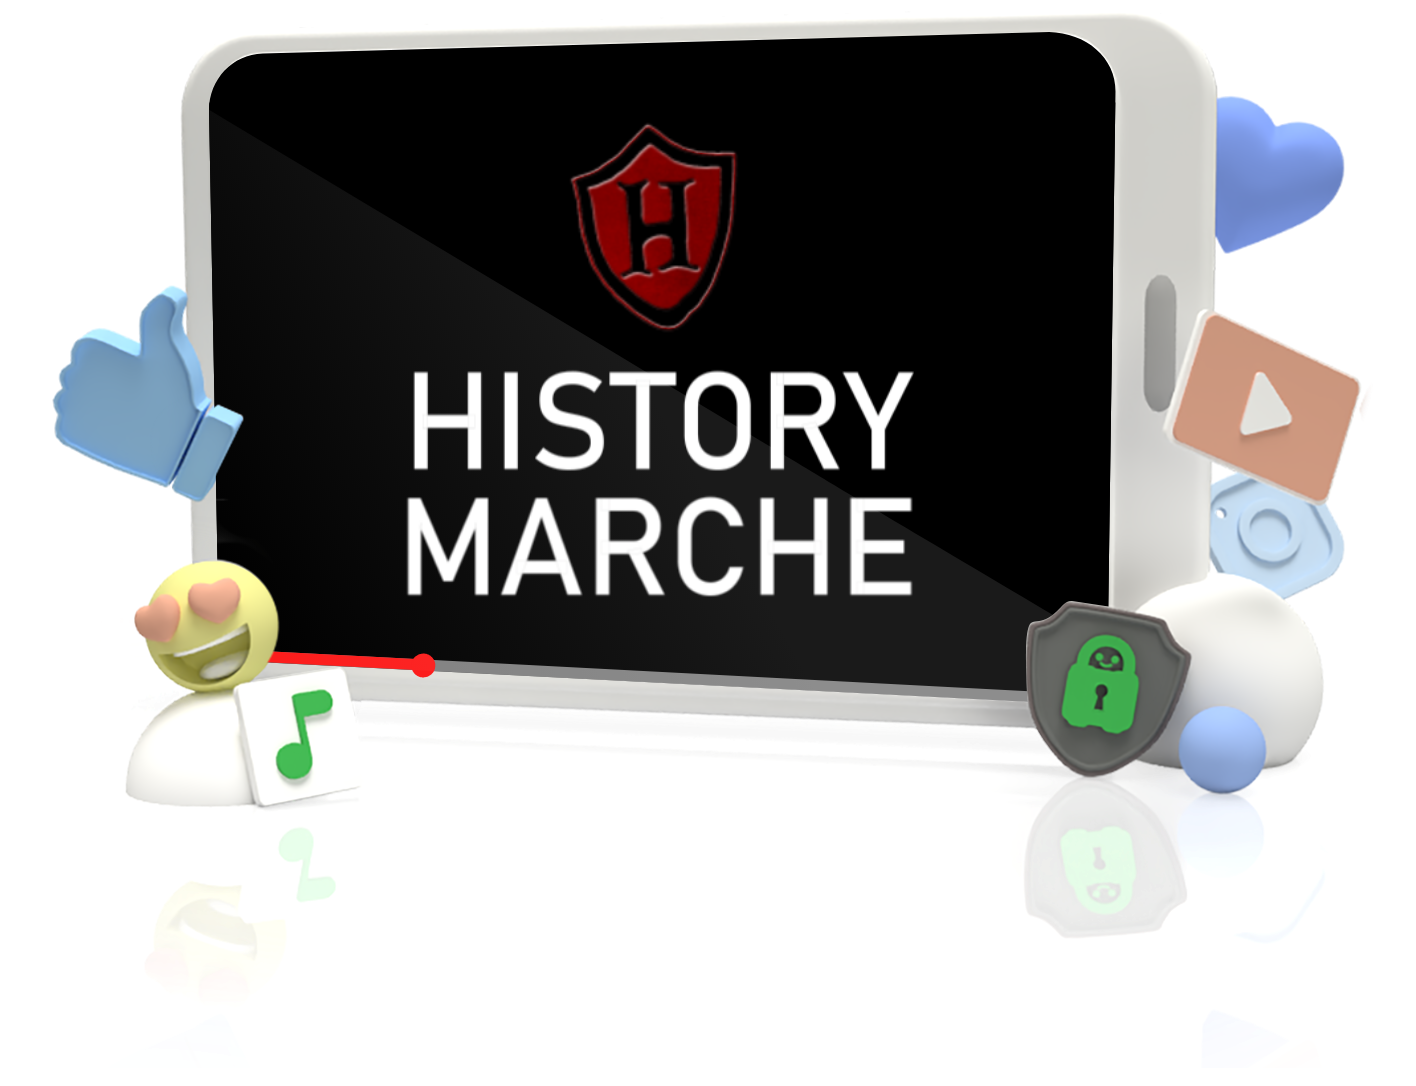 HistoryMarche